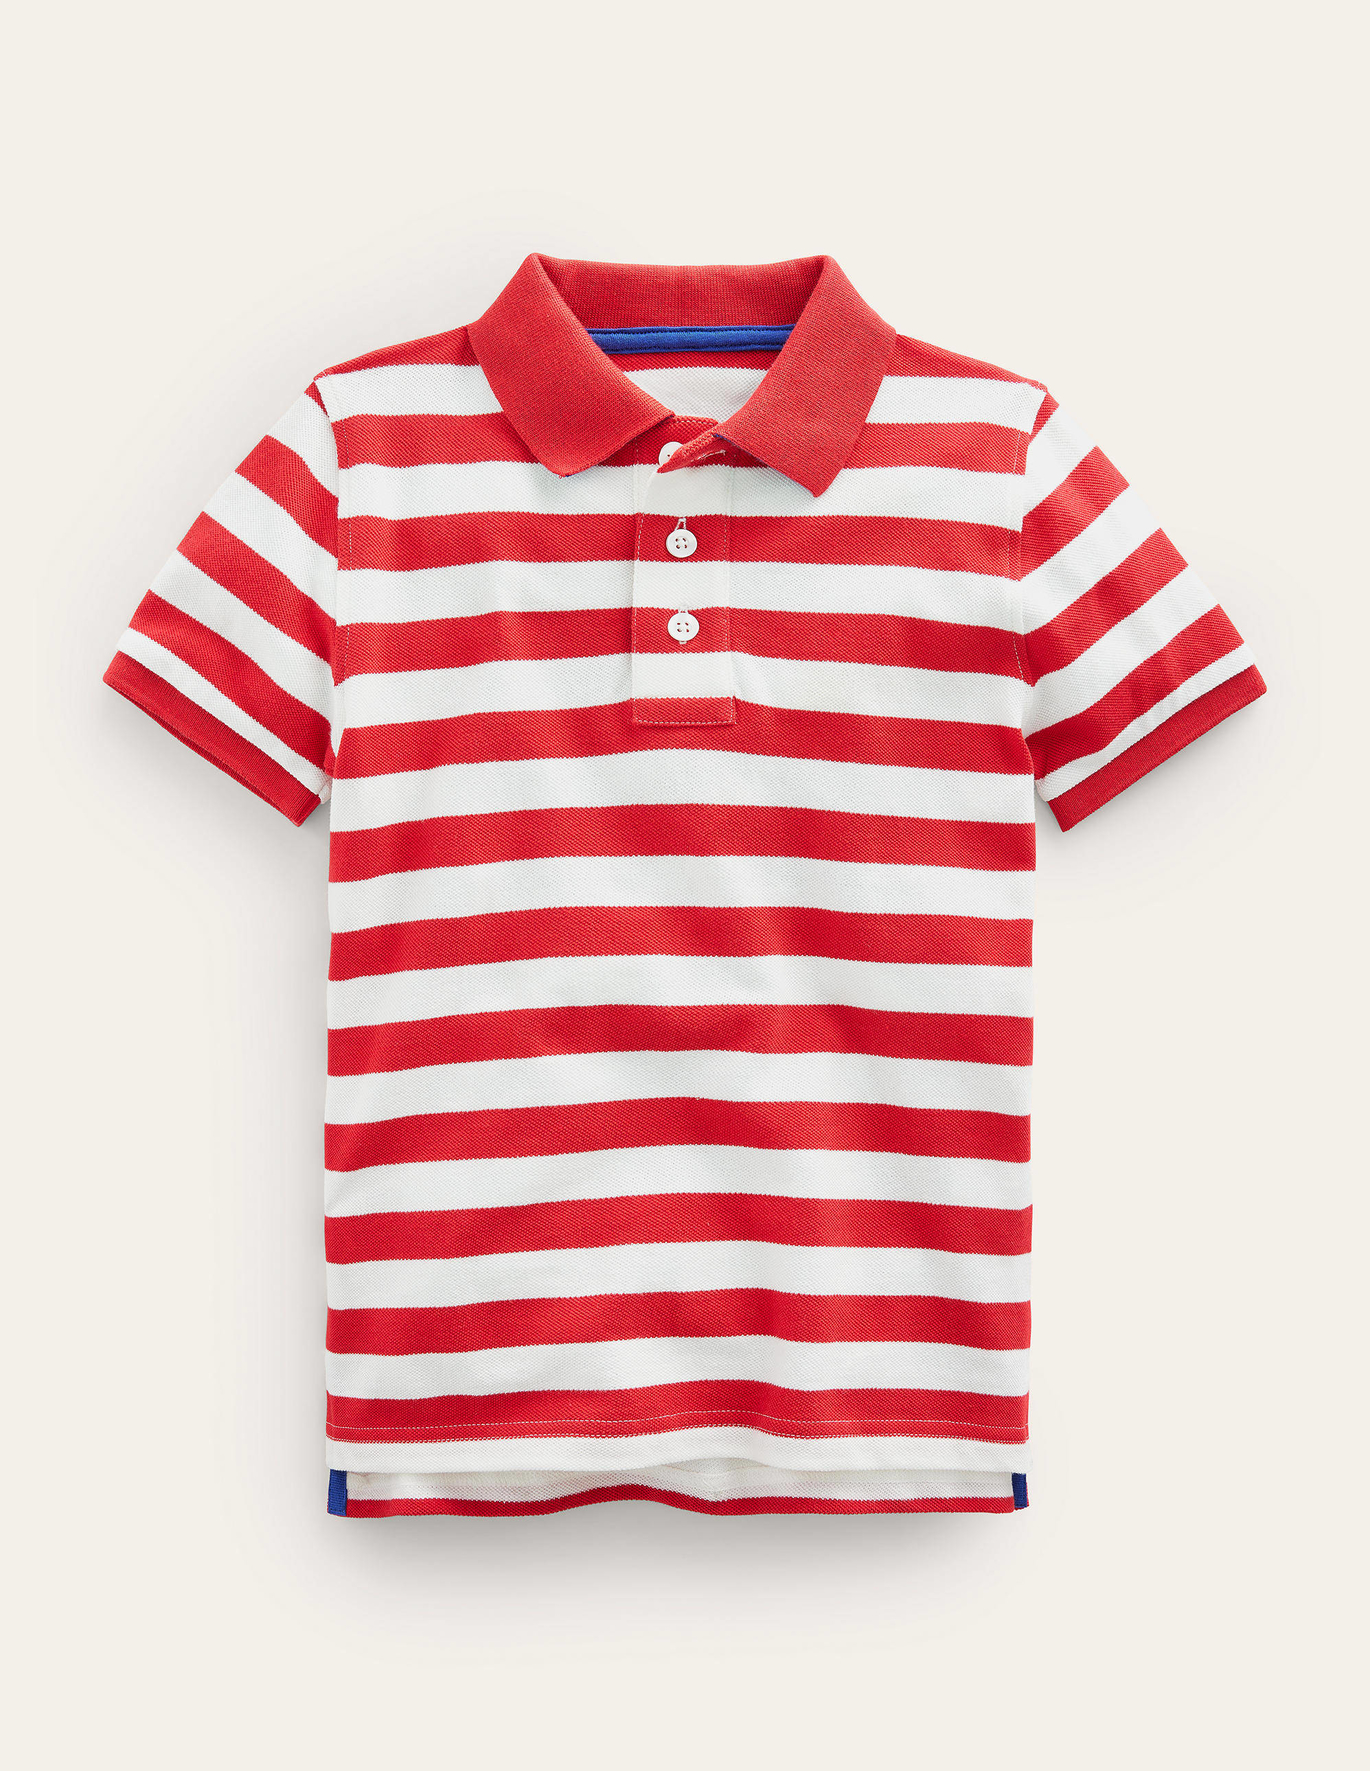 Boden Pique Polo Shirt - Breton Ivory/Red